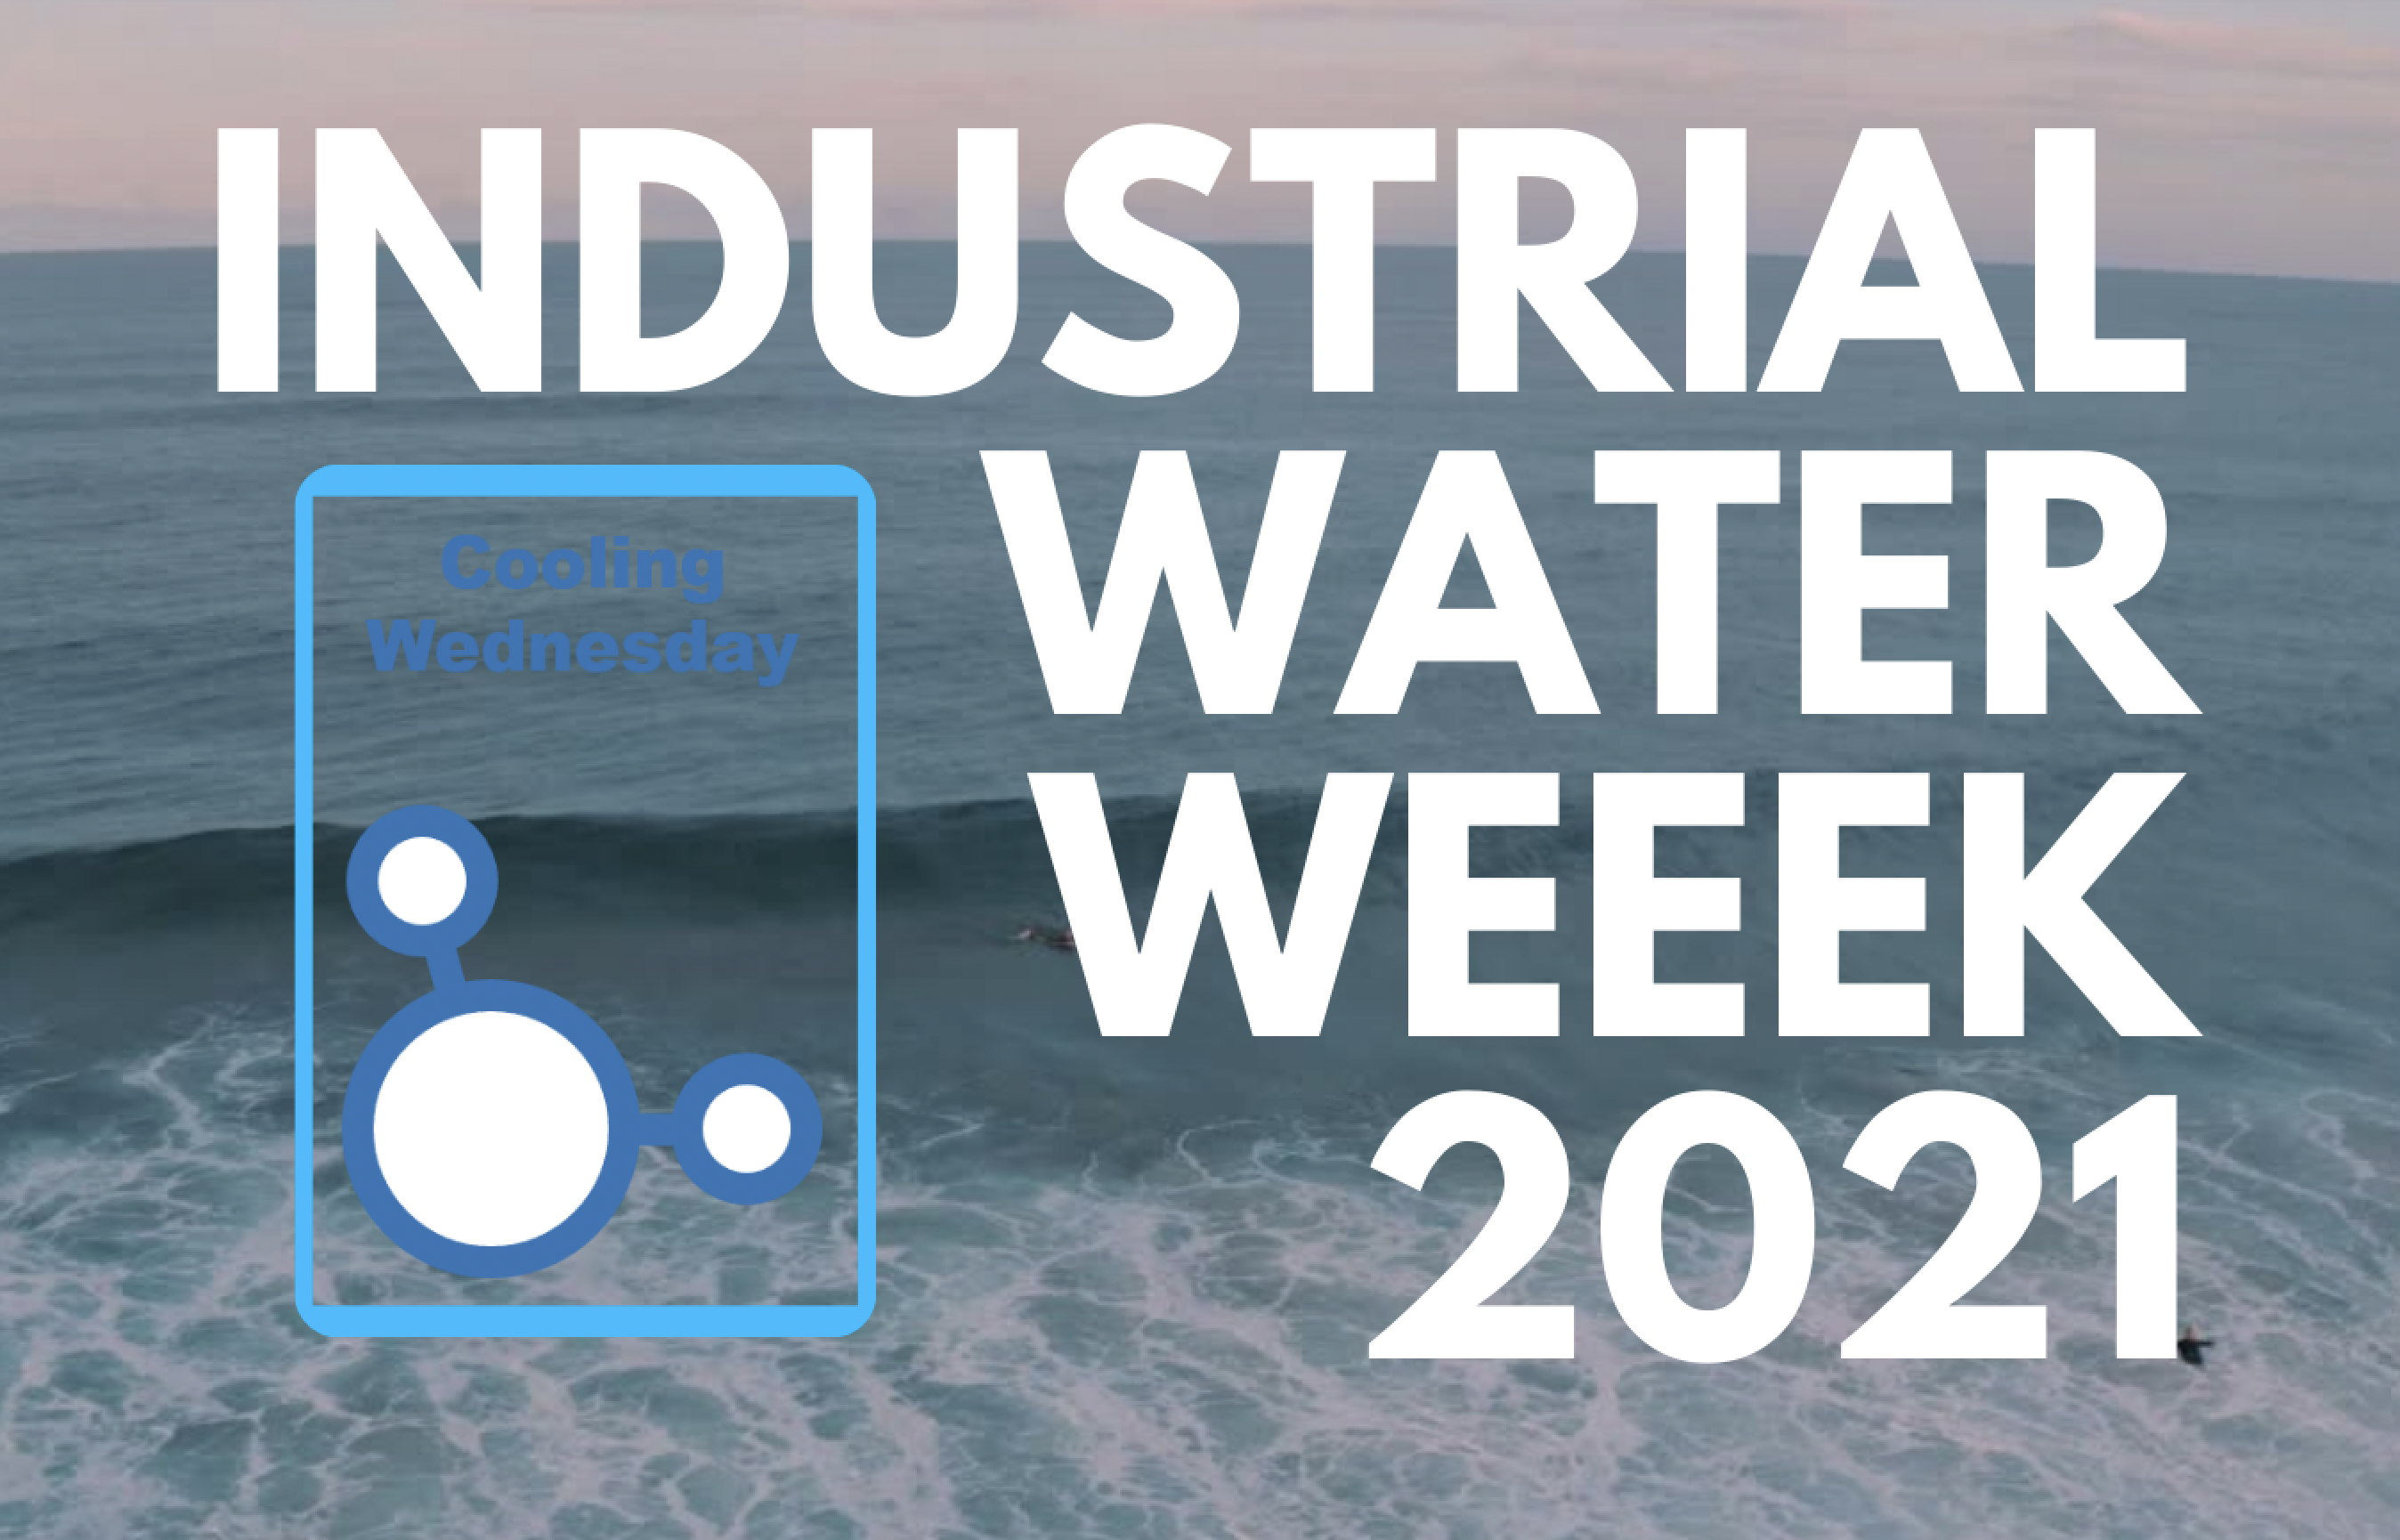 Industrial Water Week 2021, Cooling Wednesday, Legionella Awareness Month, Legionella